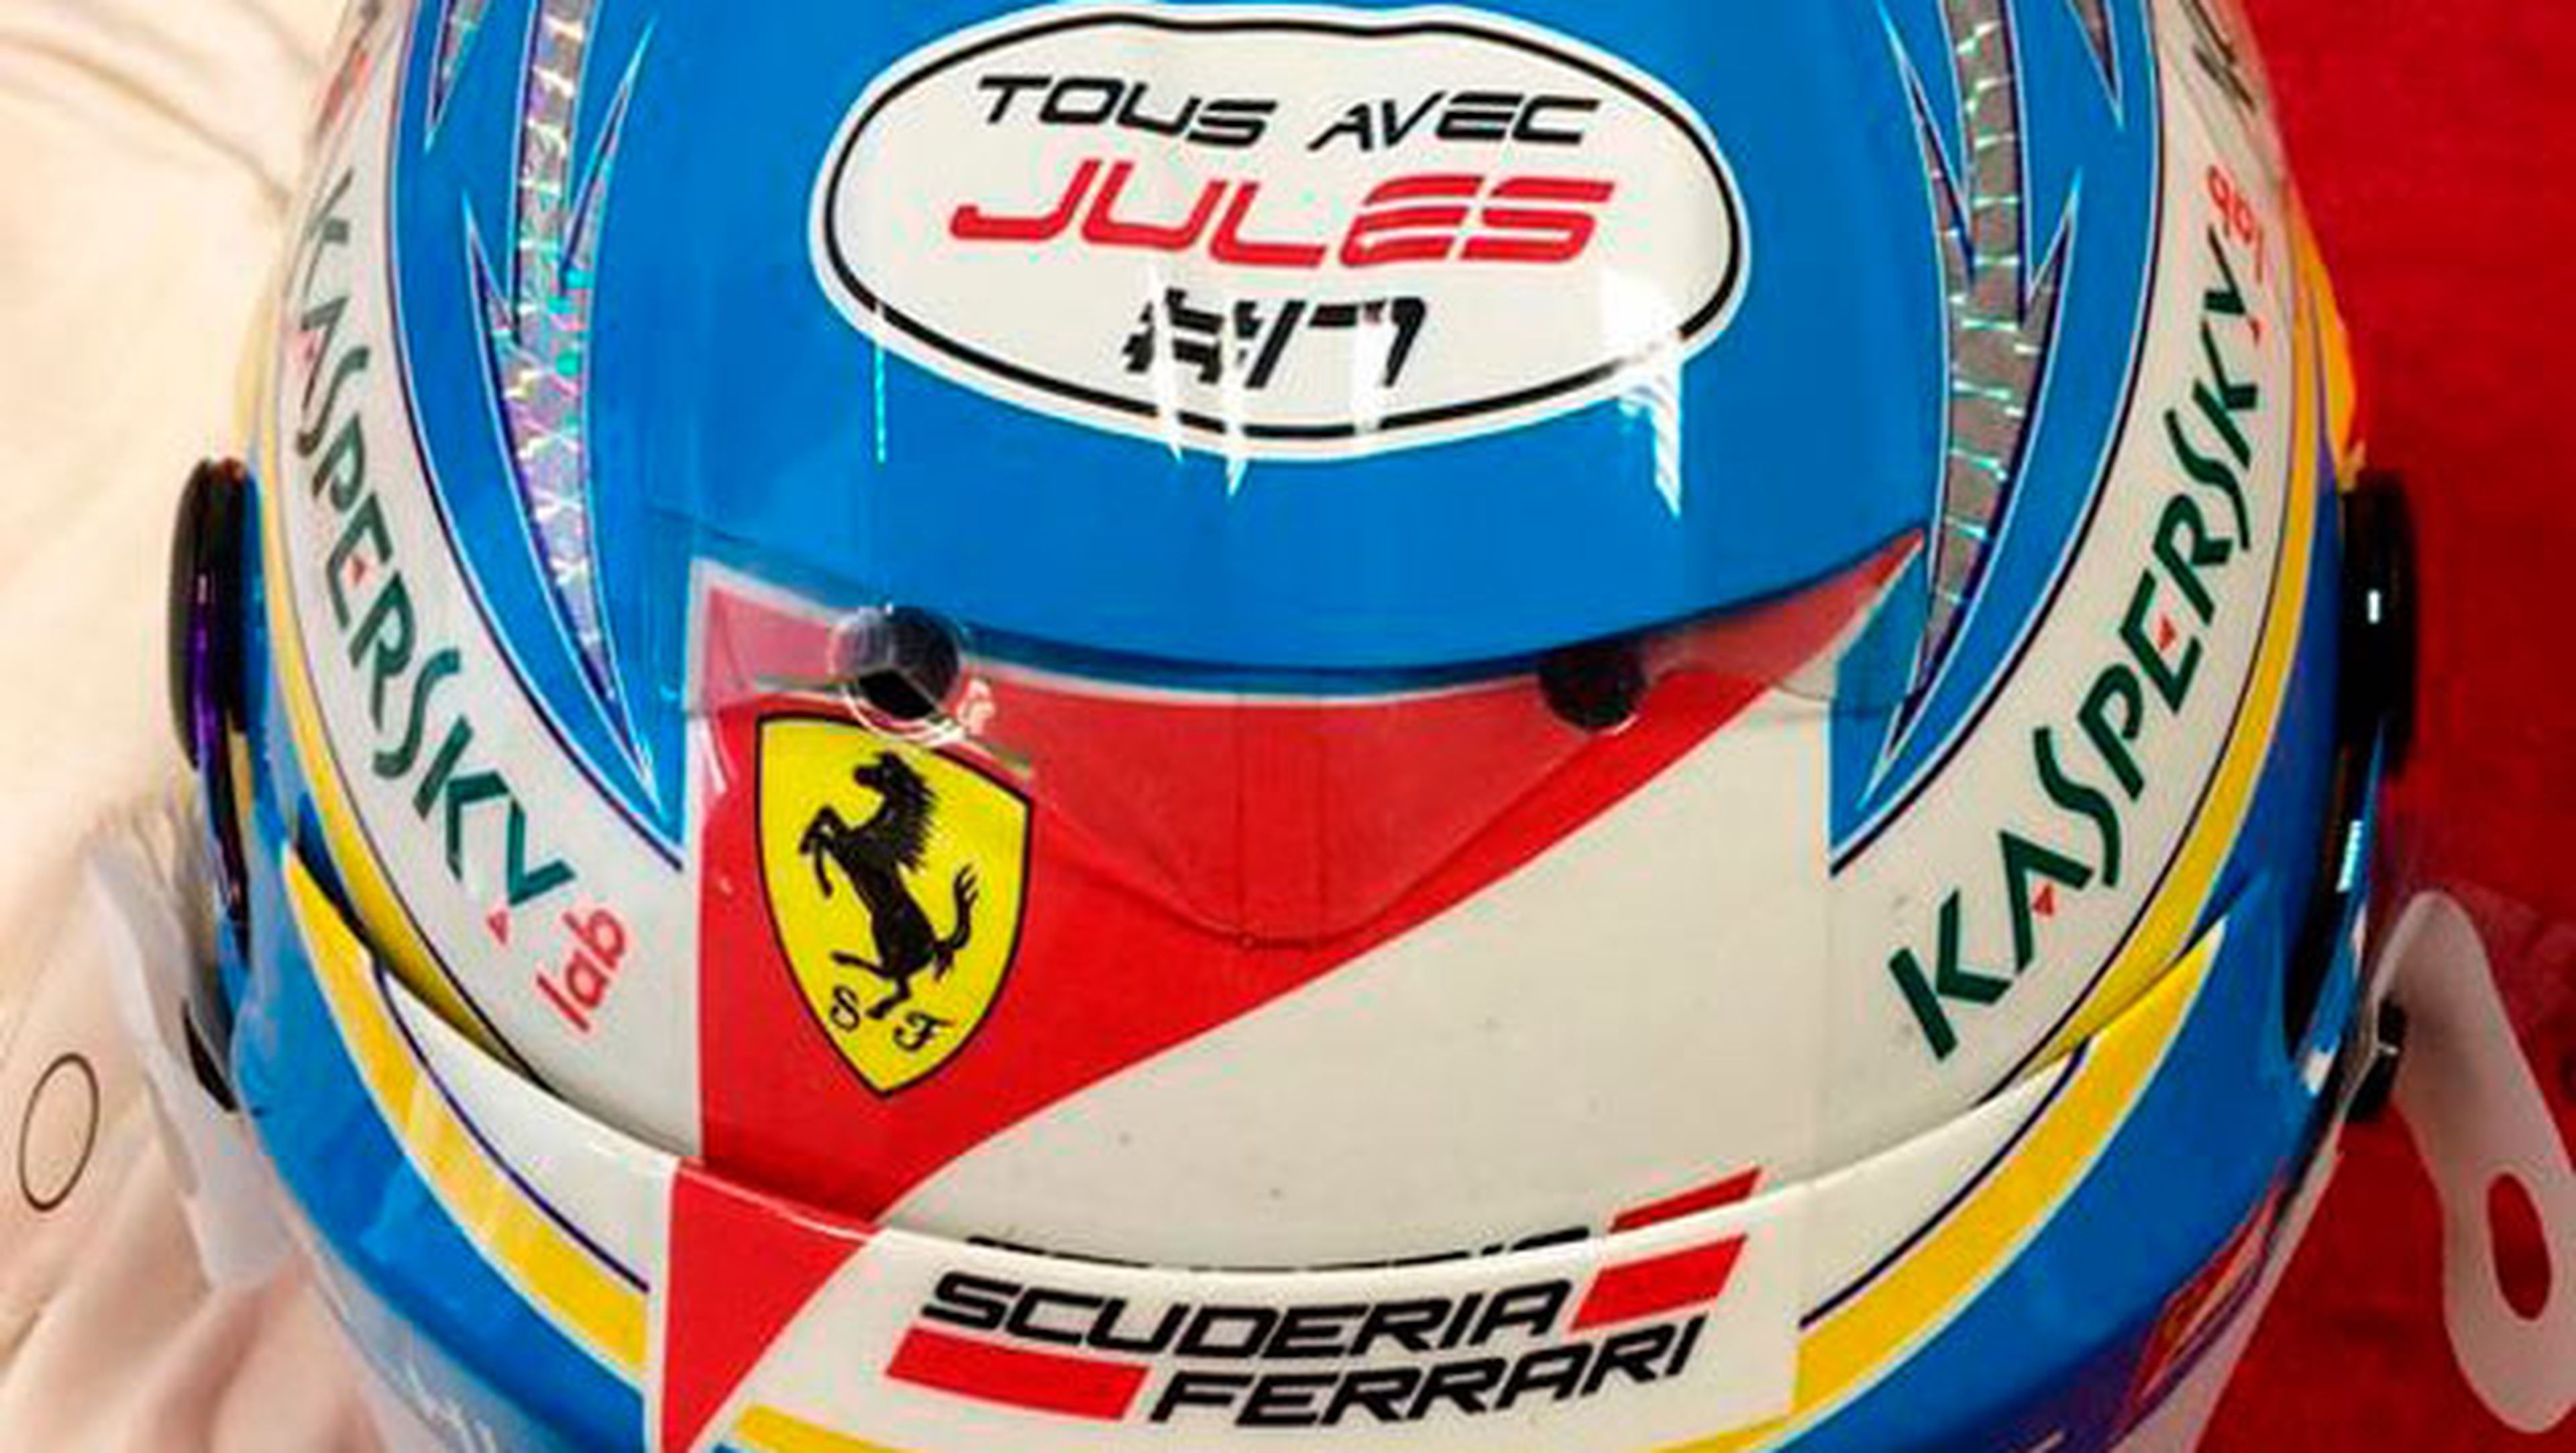 Mensaje en el casco de Fernando Alonso para Jules Bianchi